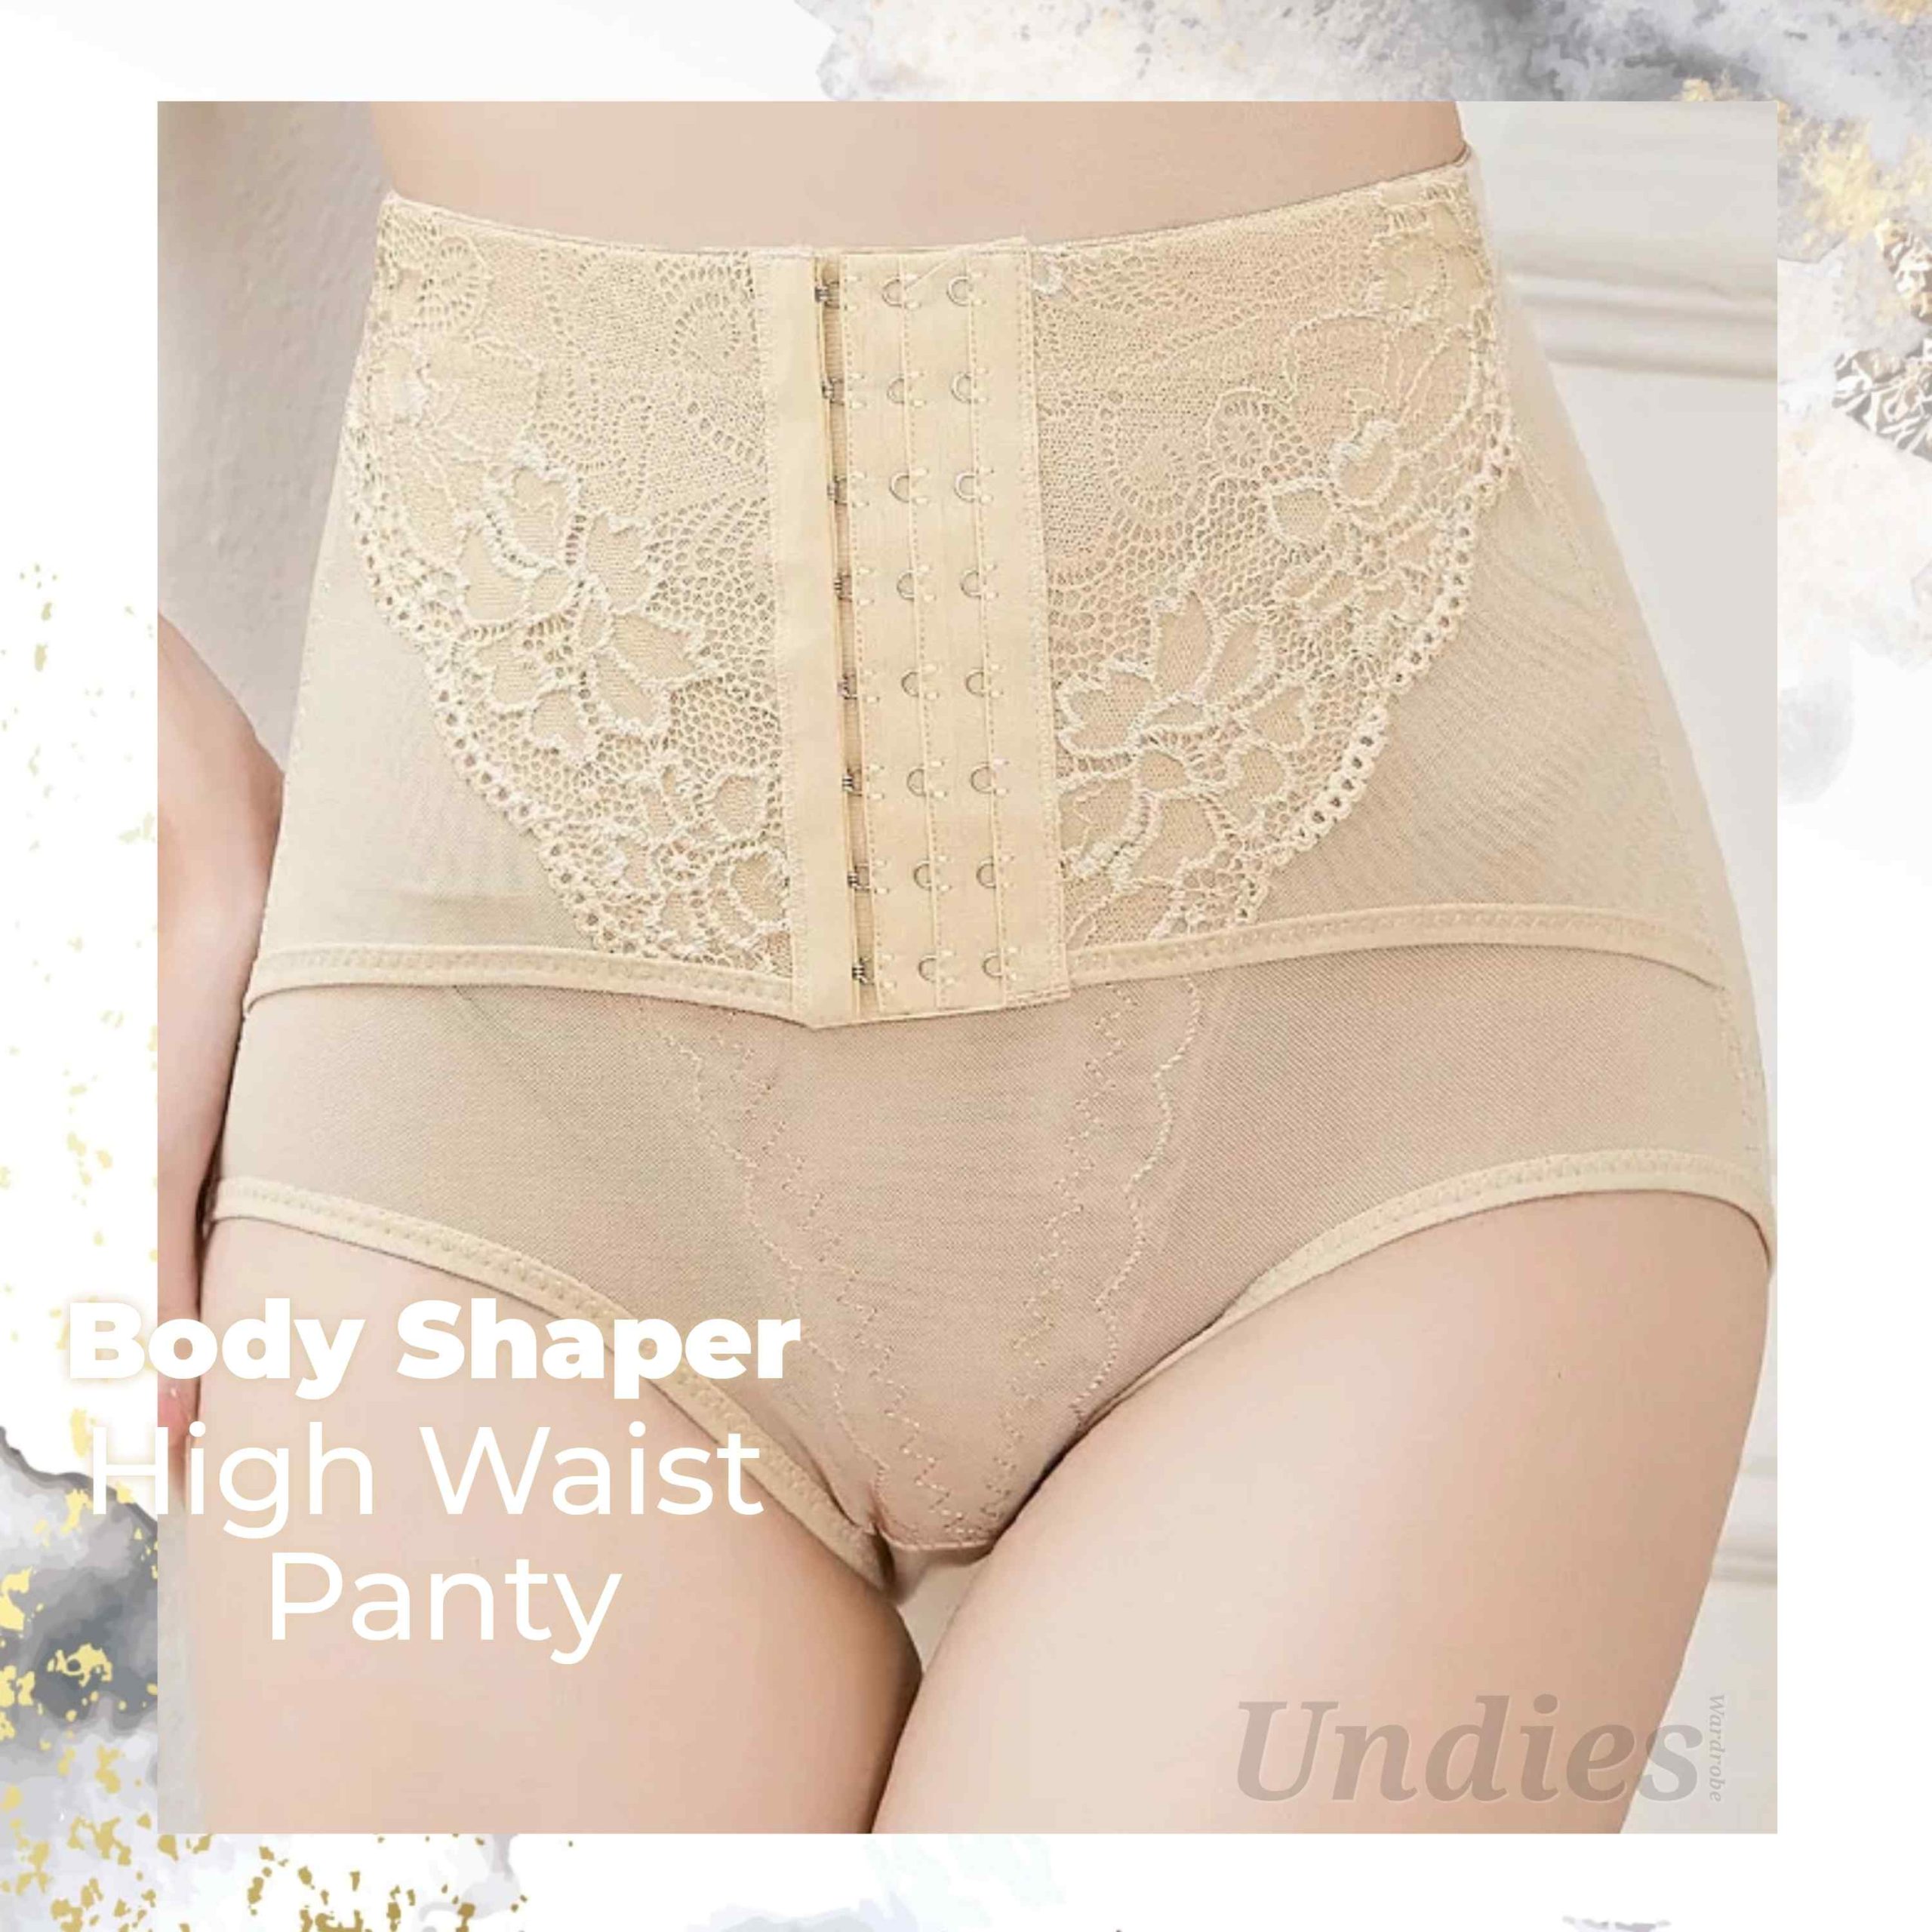 Body Shaper High Waist Panty - Undies Wardrobe